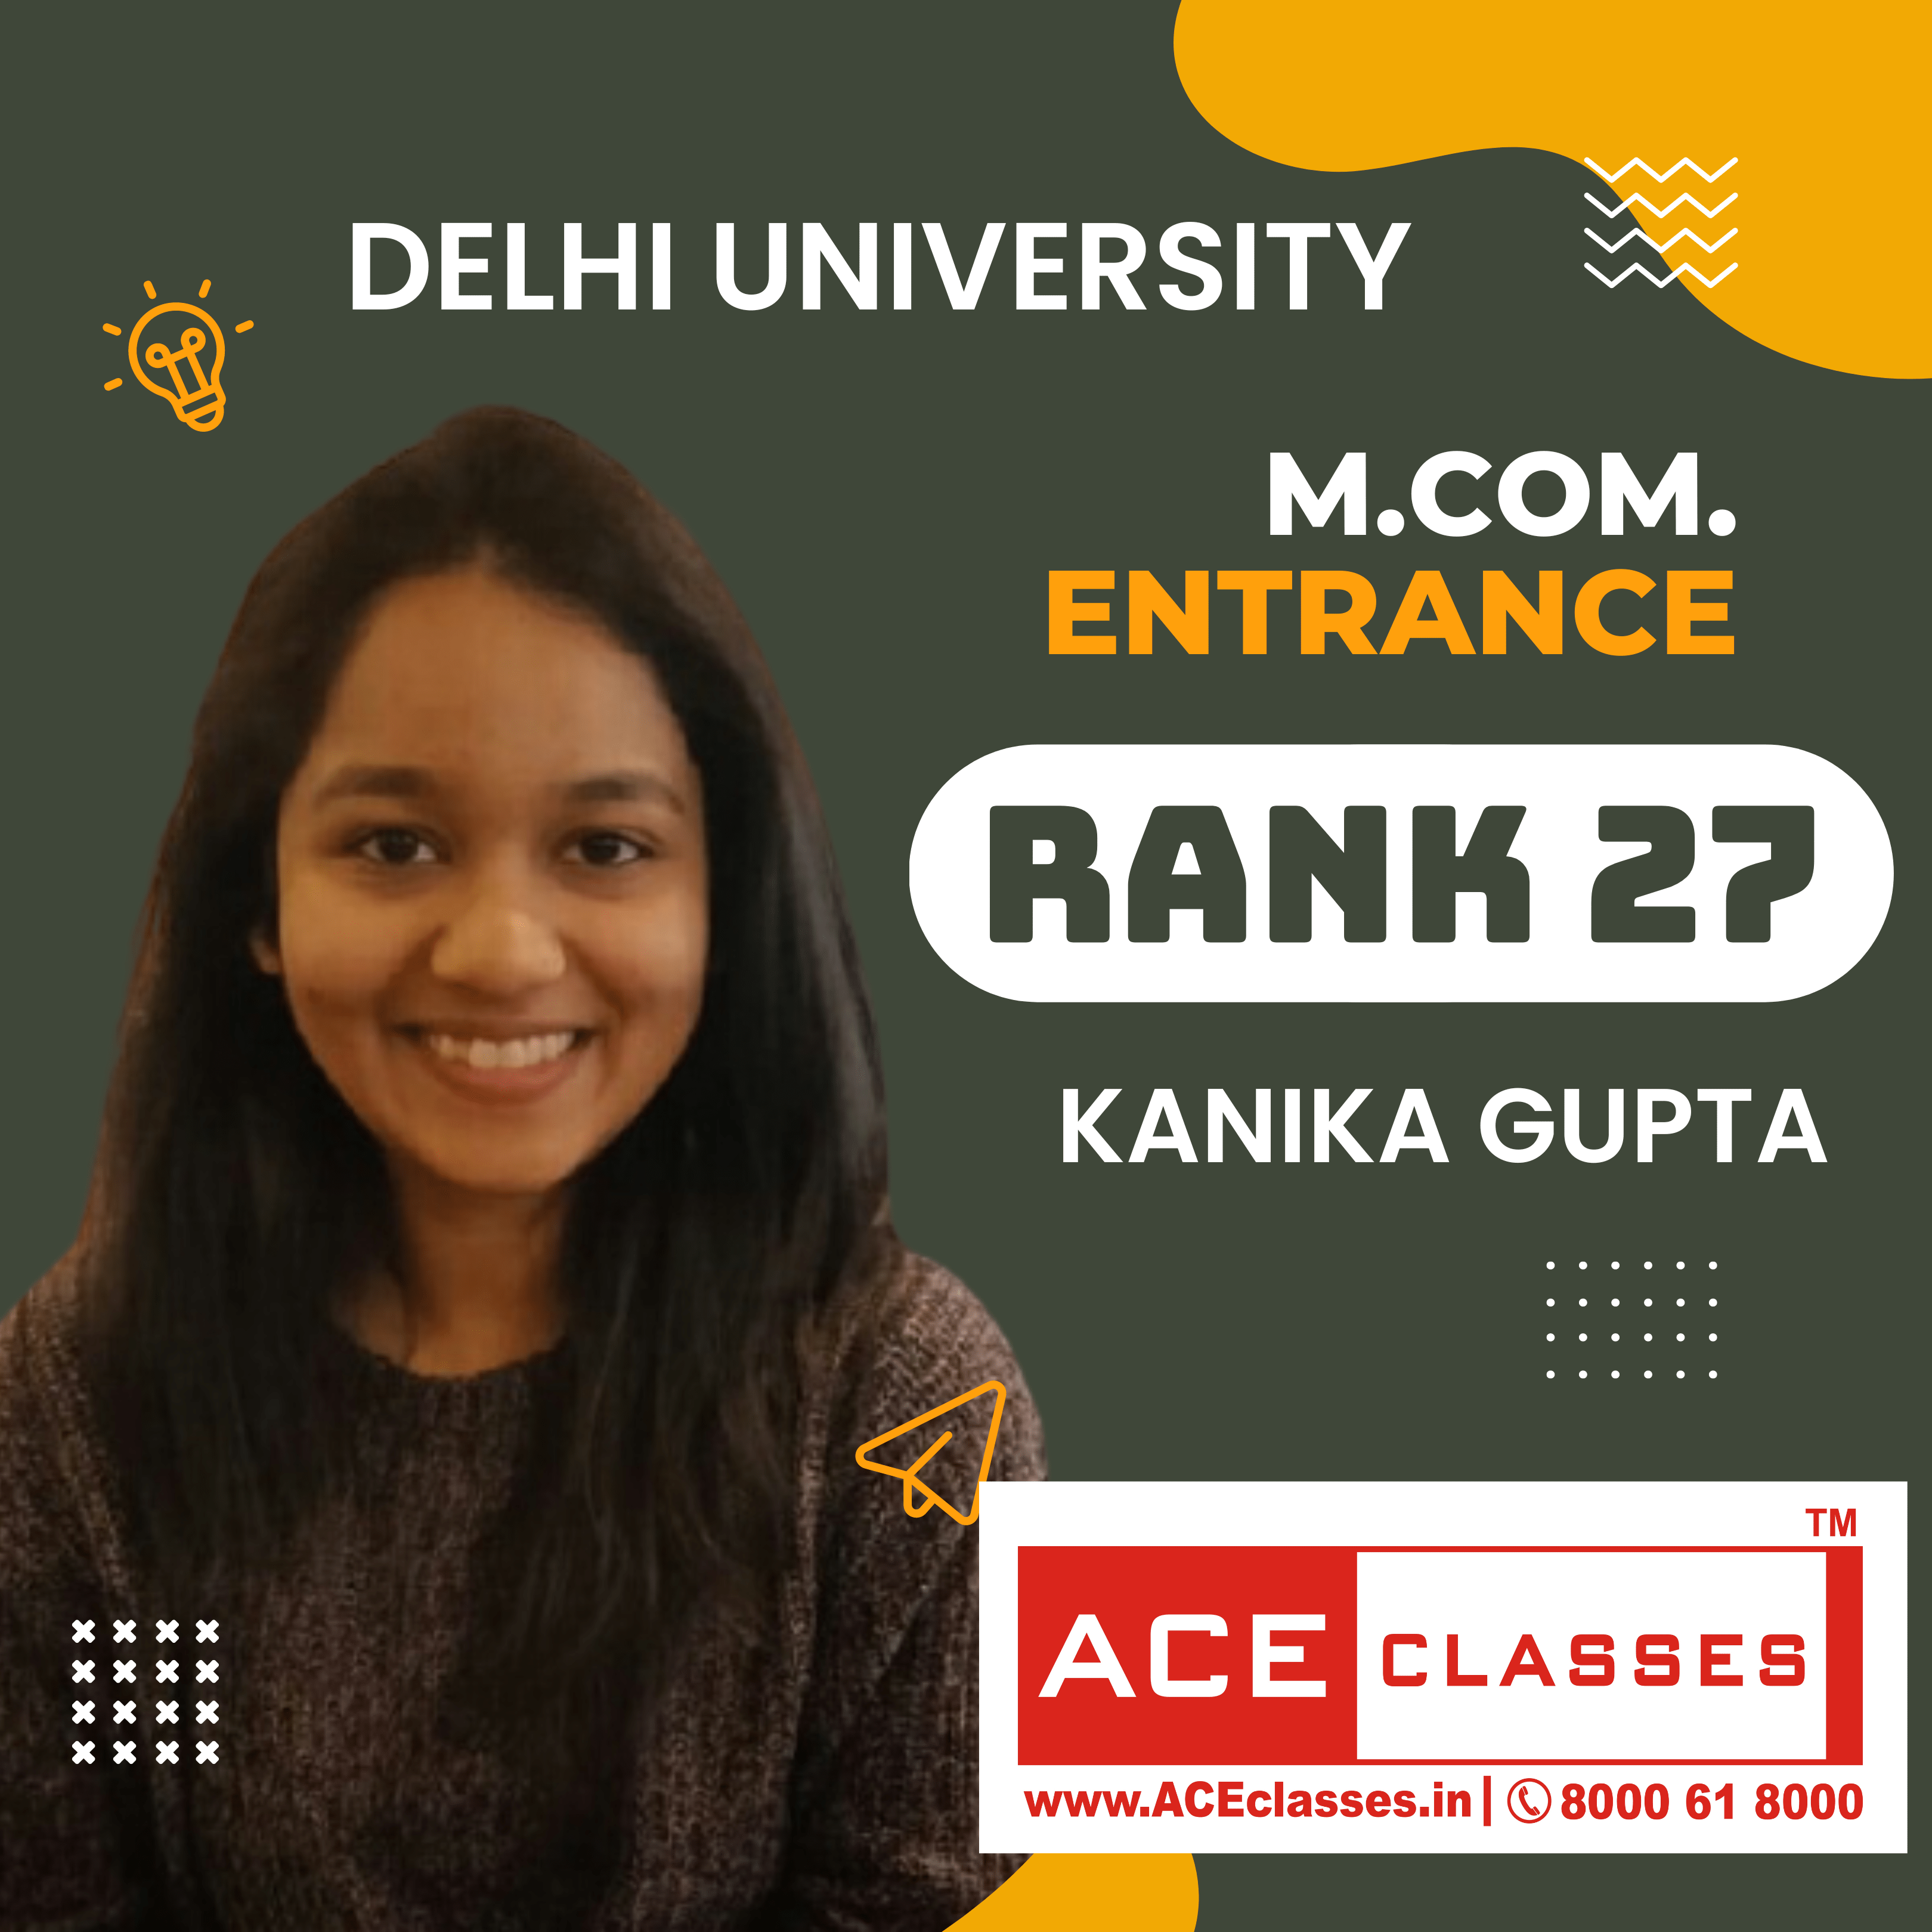 Kanika Gupta M.com entrance Delhi University 27 rank holder image